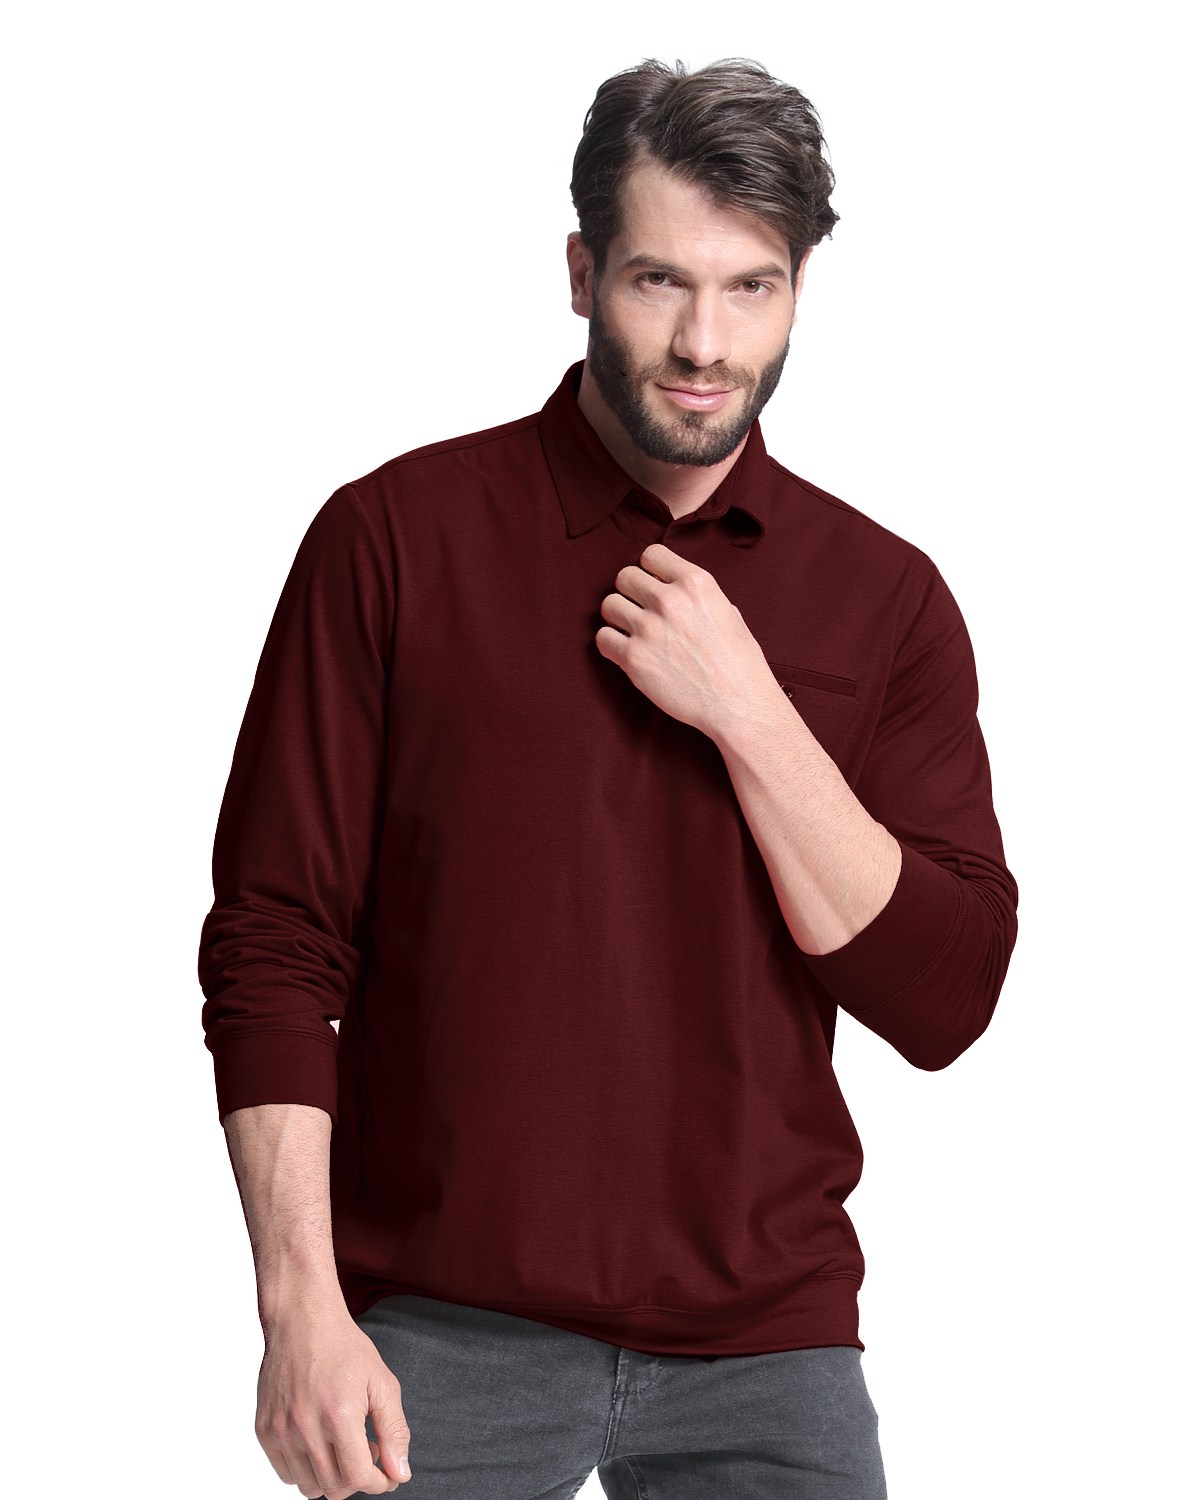 MODCHOK-Homme-Quick-Dry-T-Shirts-Manche-Longue-Top-Tee-Chemise-Coton-Casual-Classique-Sports-Shirts-1461408